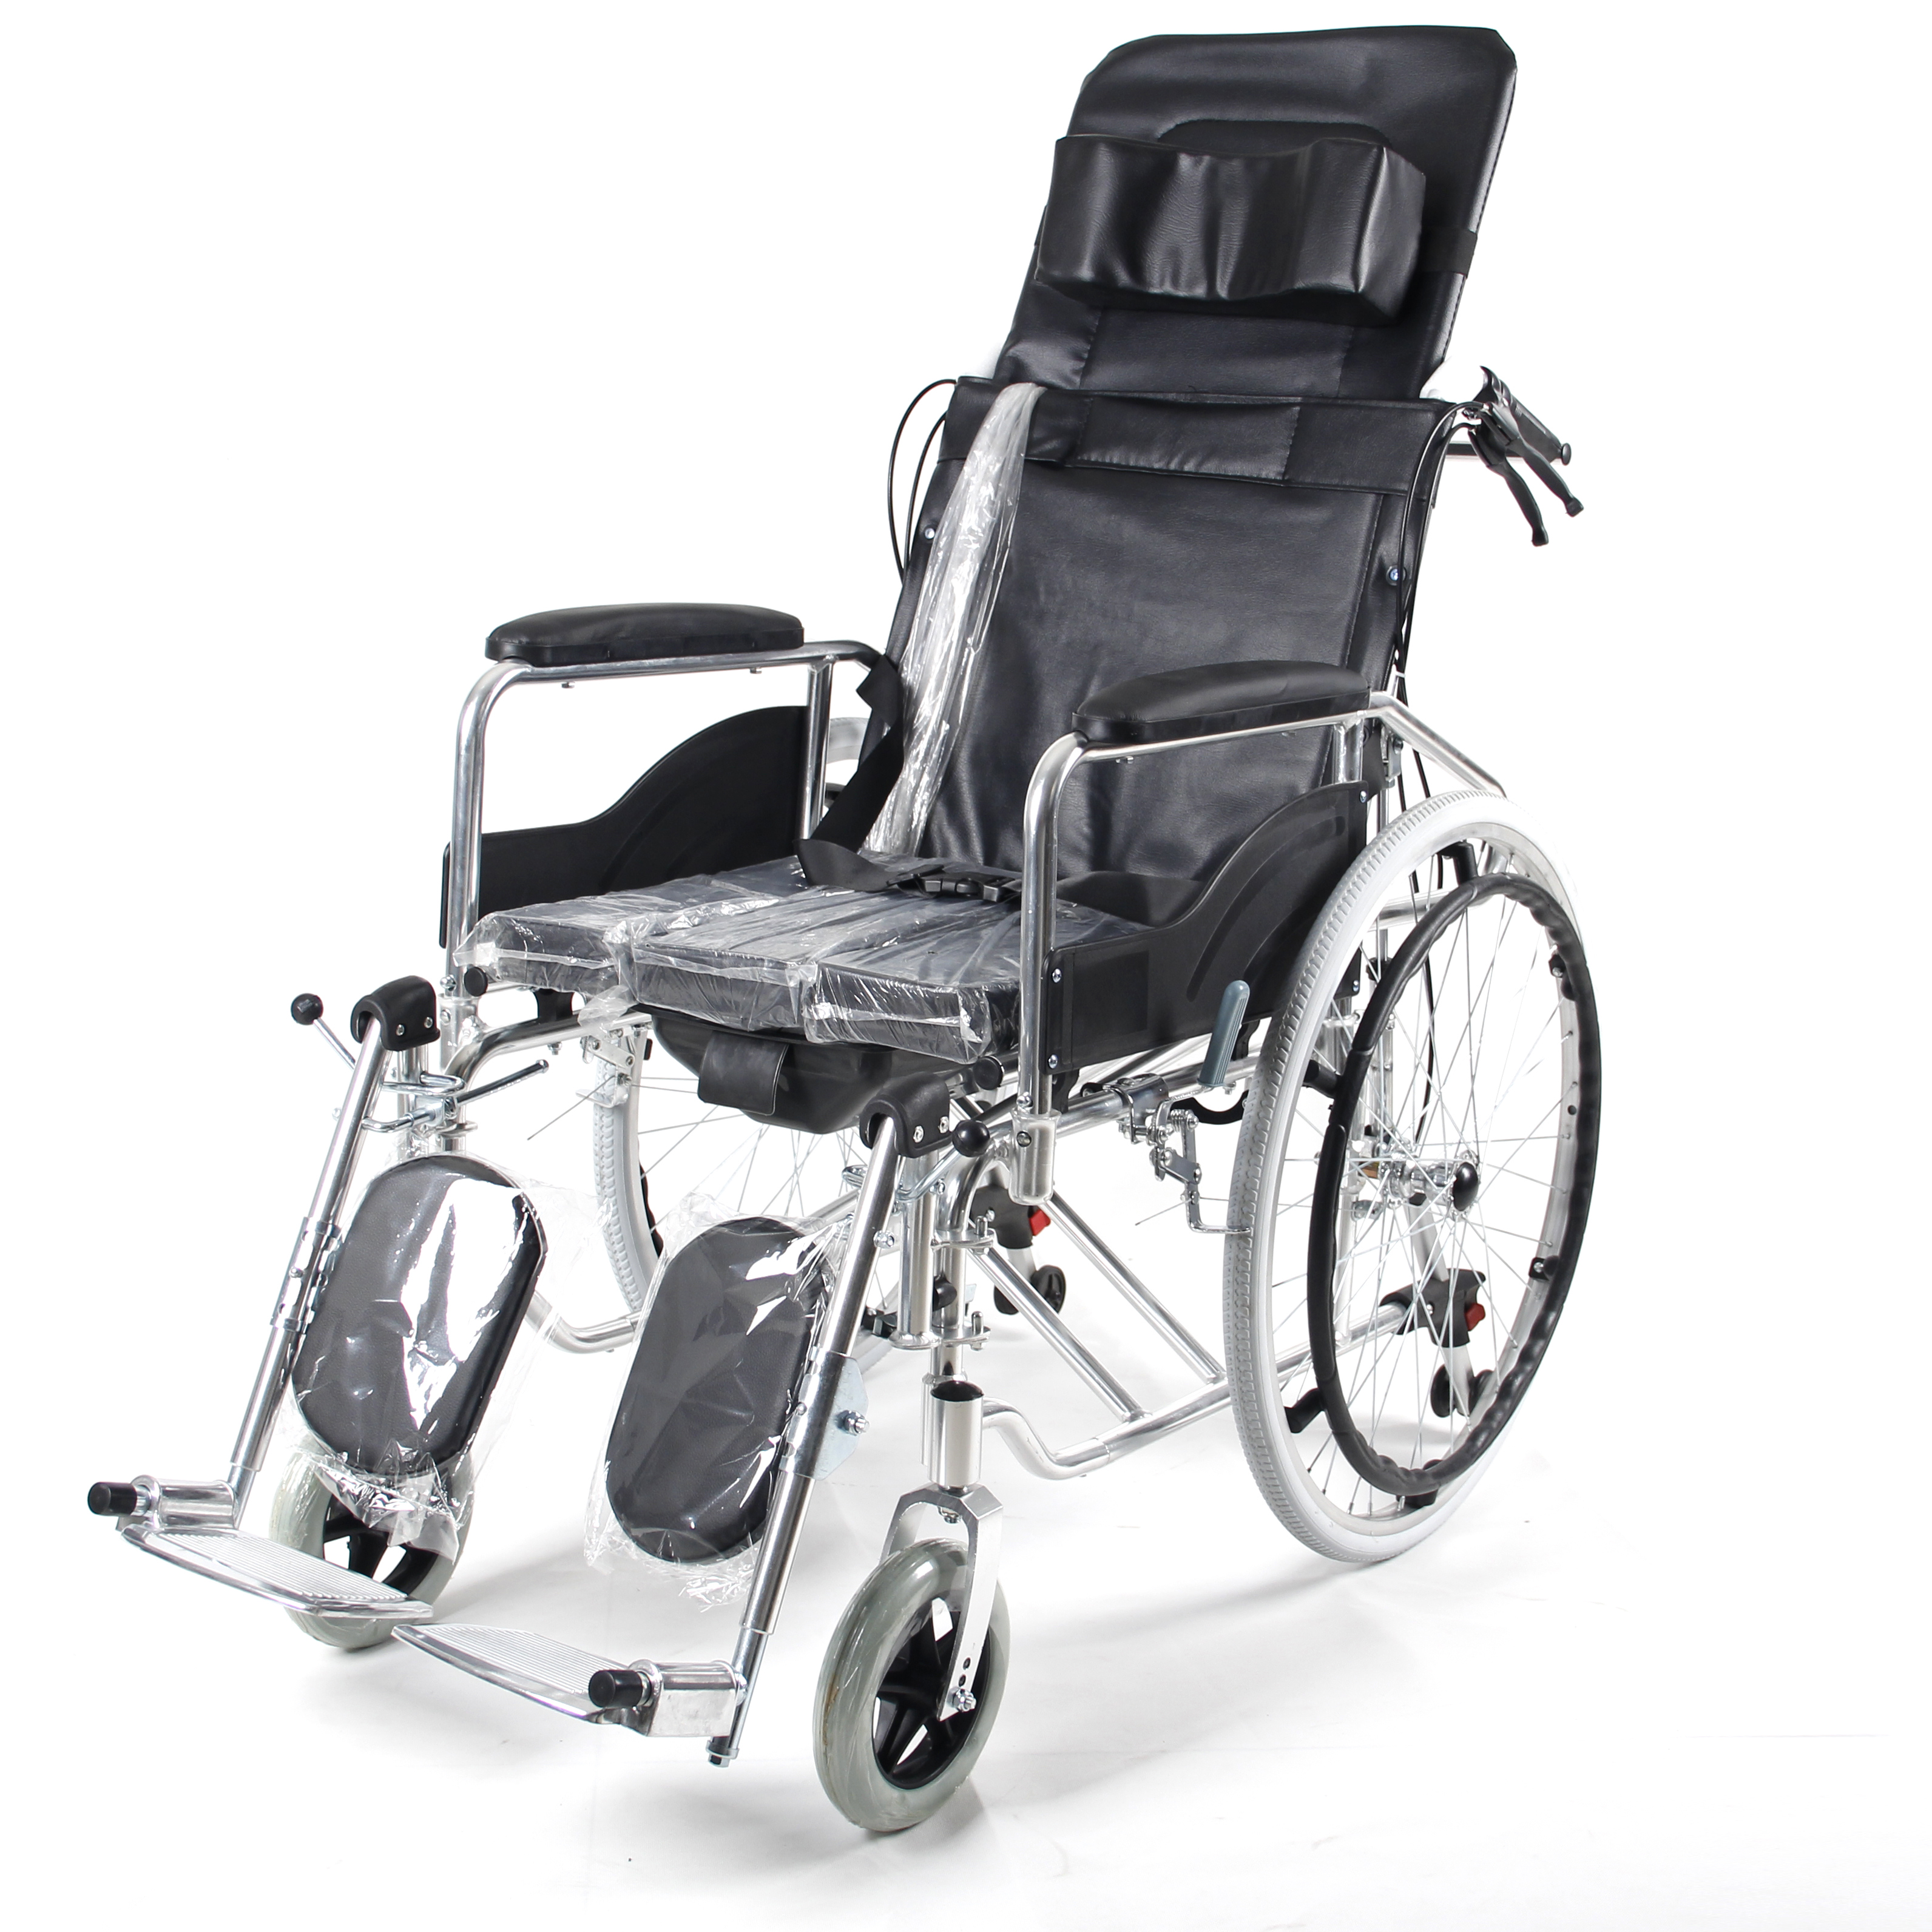 Folding multifunctional manual portable wheelchair